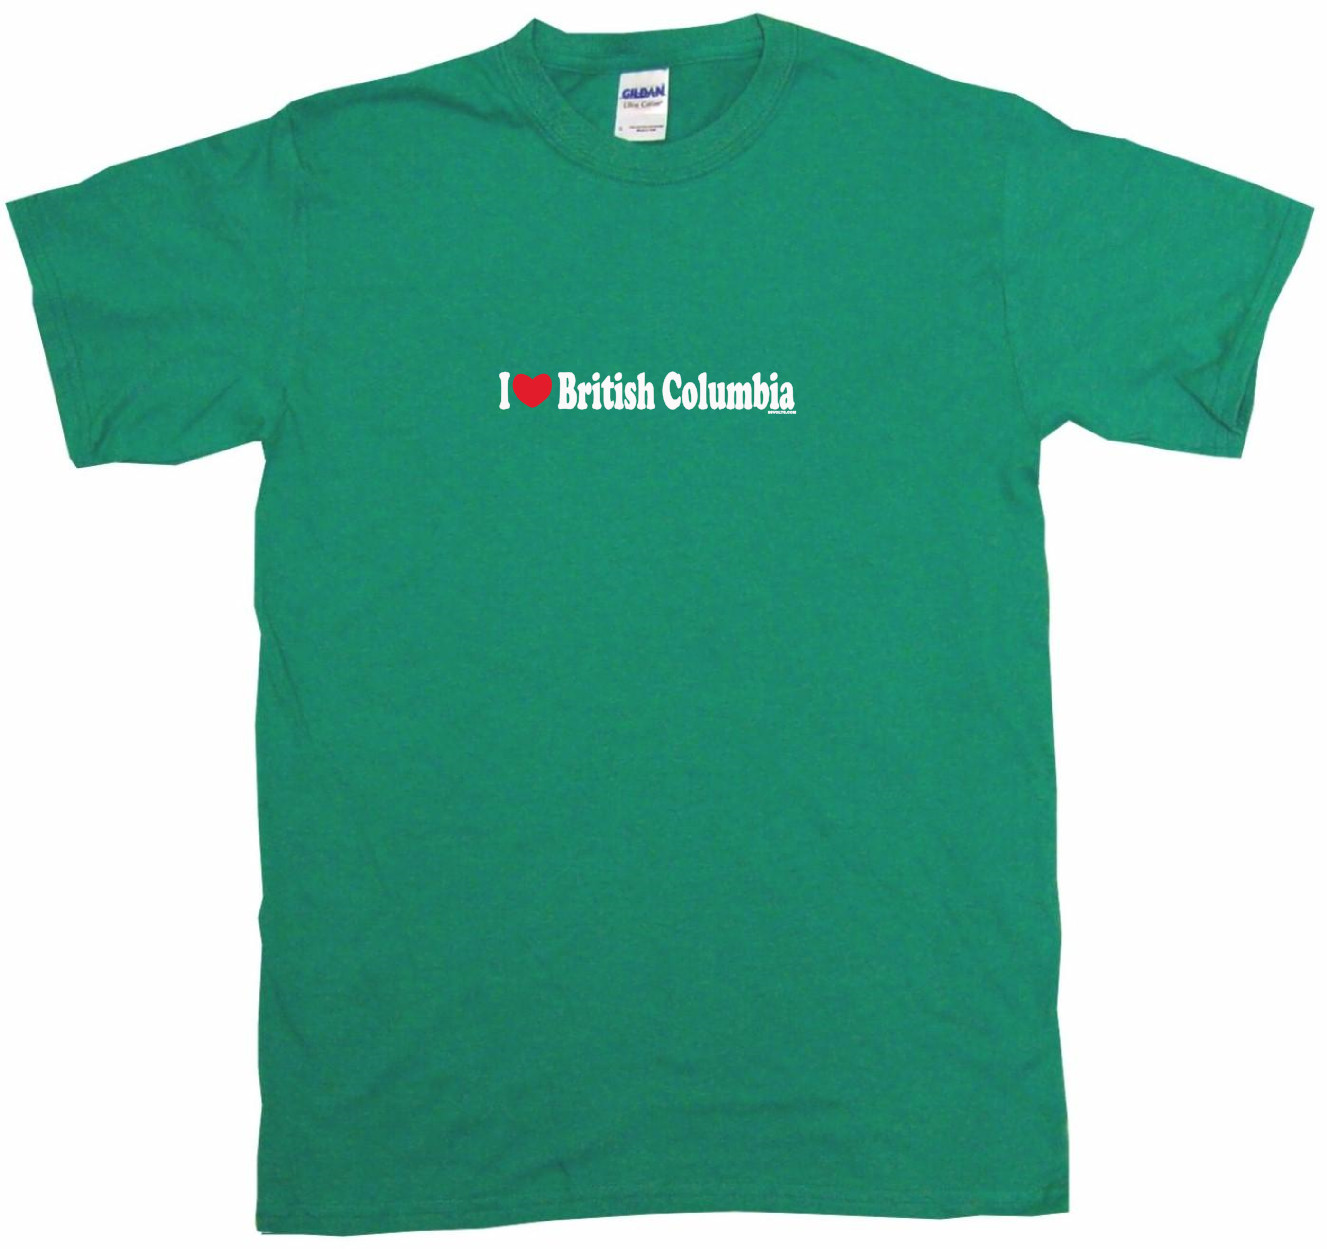 I Heart Love British Columbia Mens Tee Shirt Pick Size Color Small-6XL 